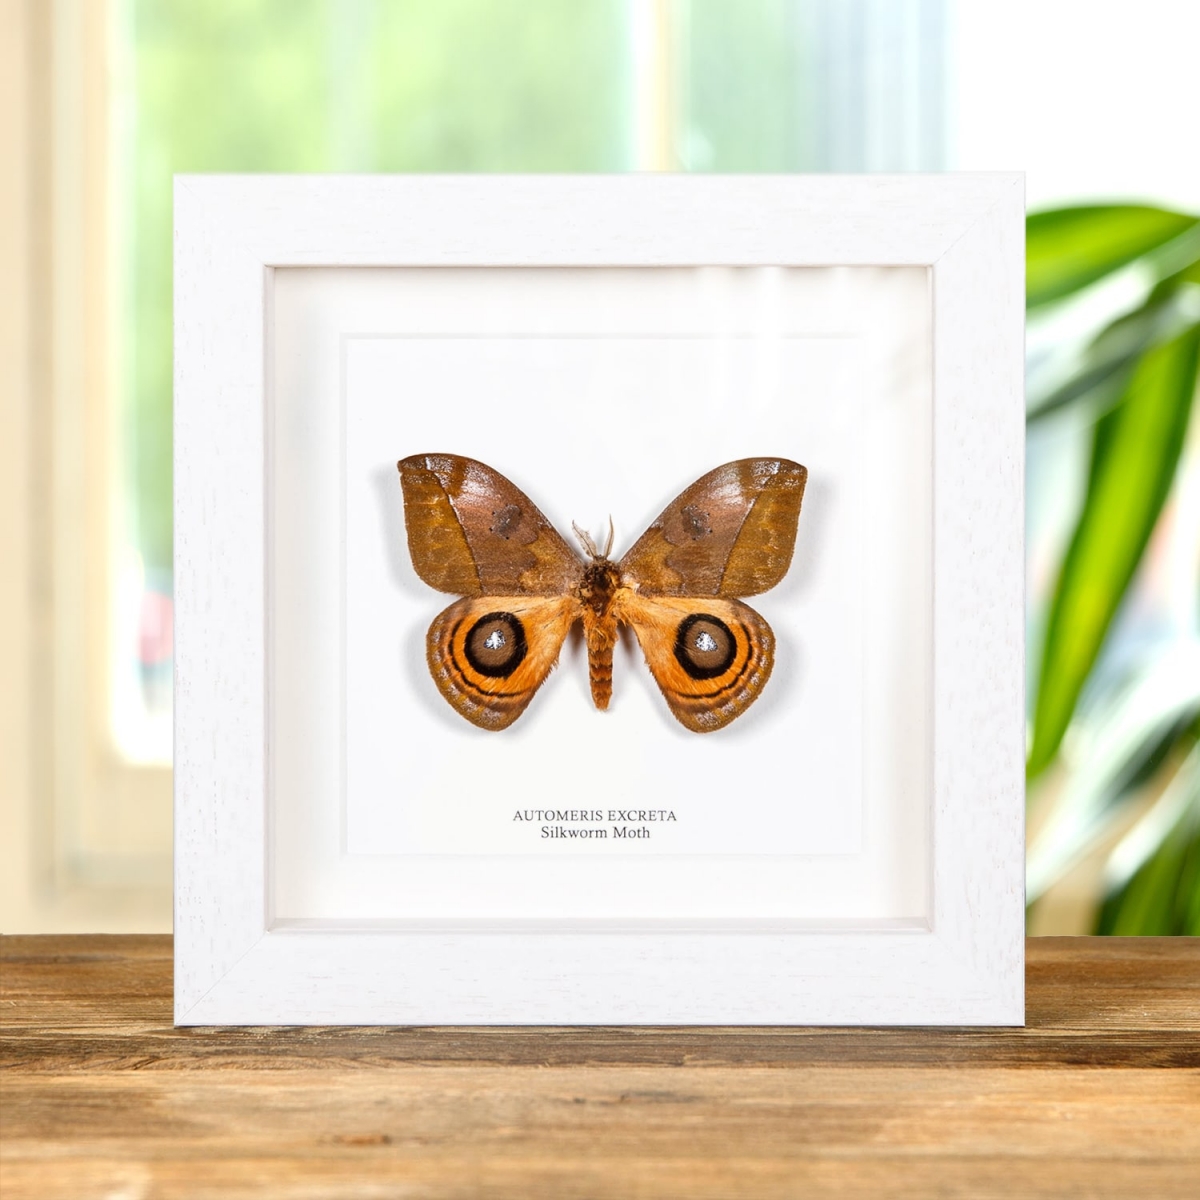 Silkworm Moth In Box Frame (Automeris excreta)